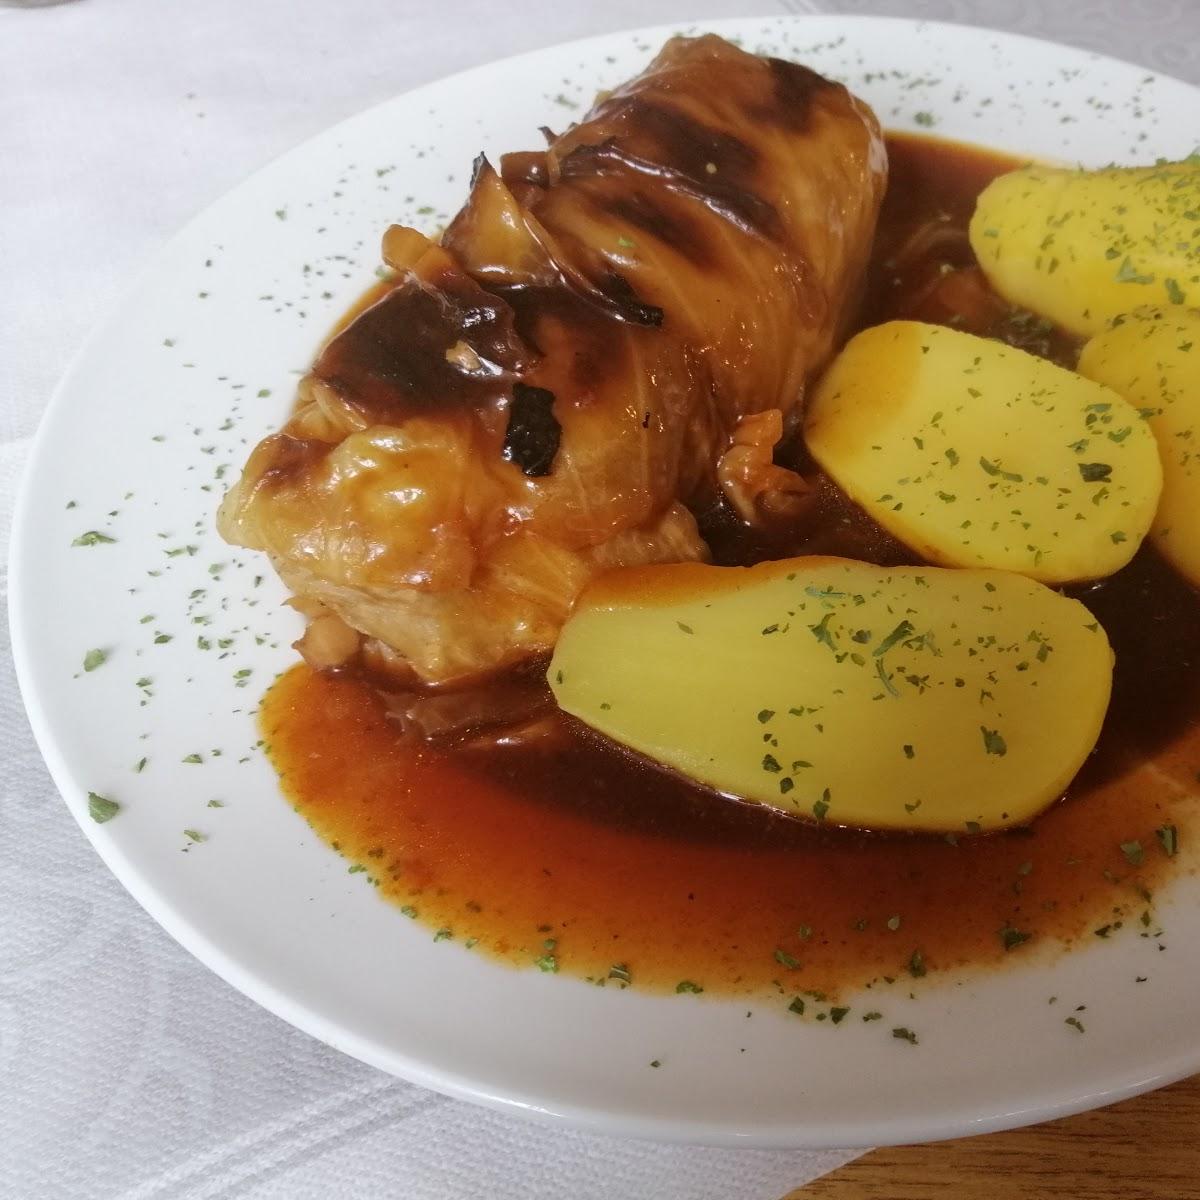 Restaurant "Zum Adler" in Hanau